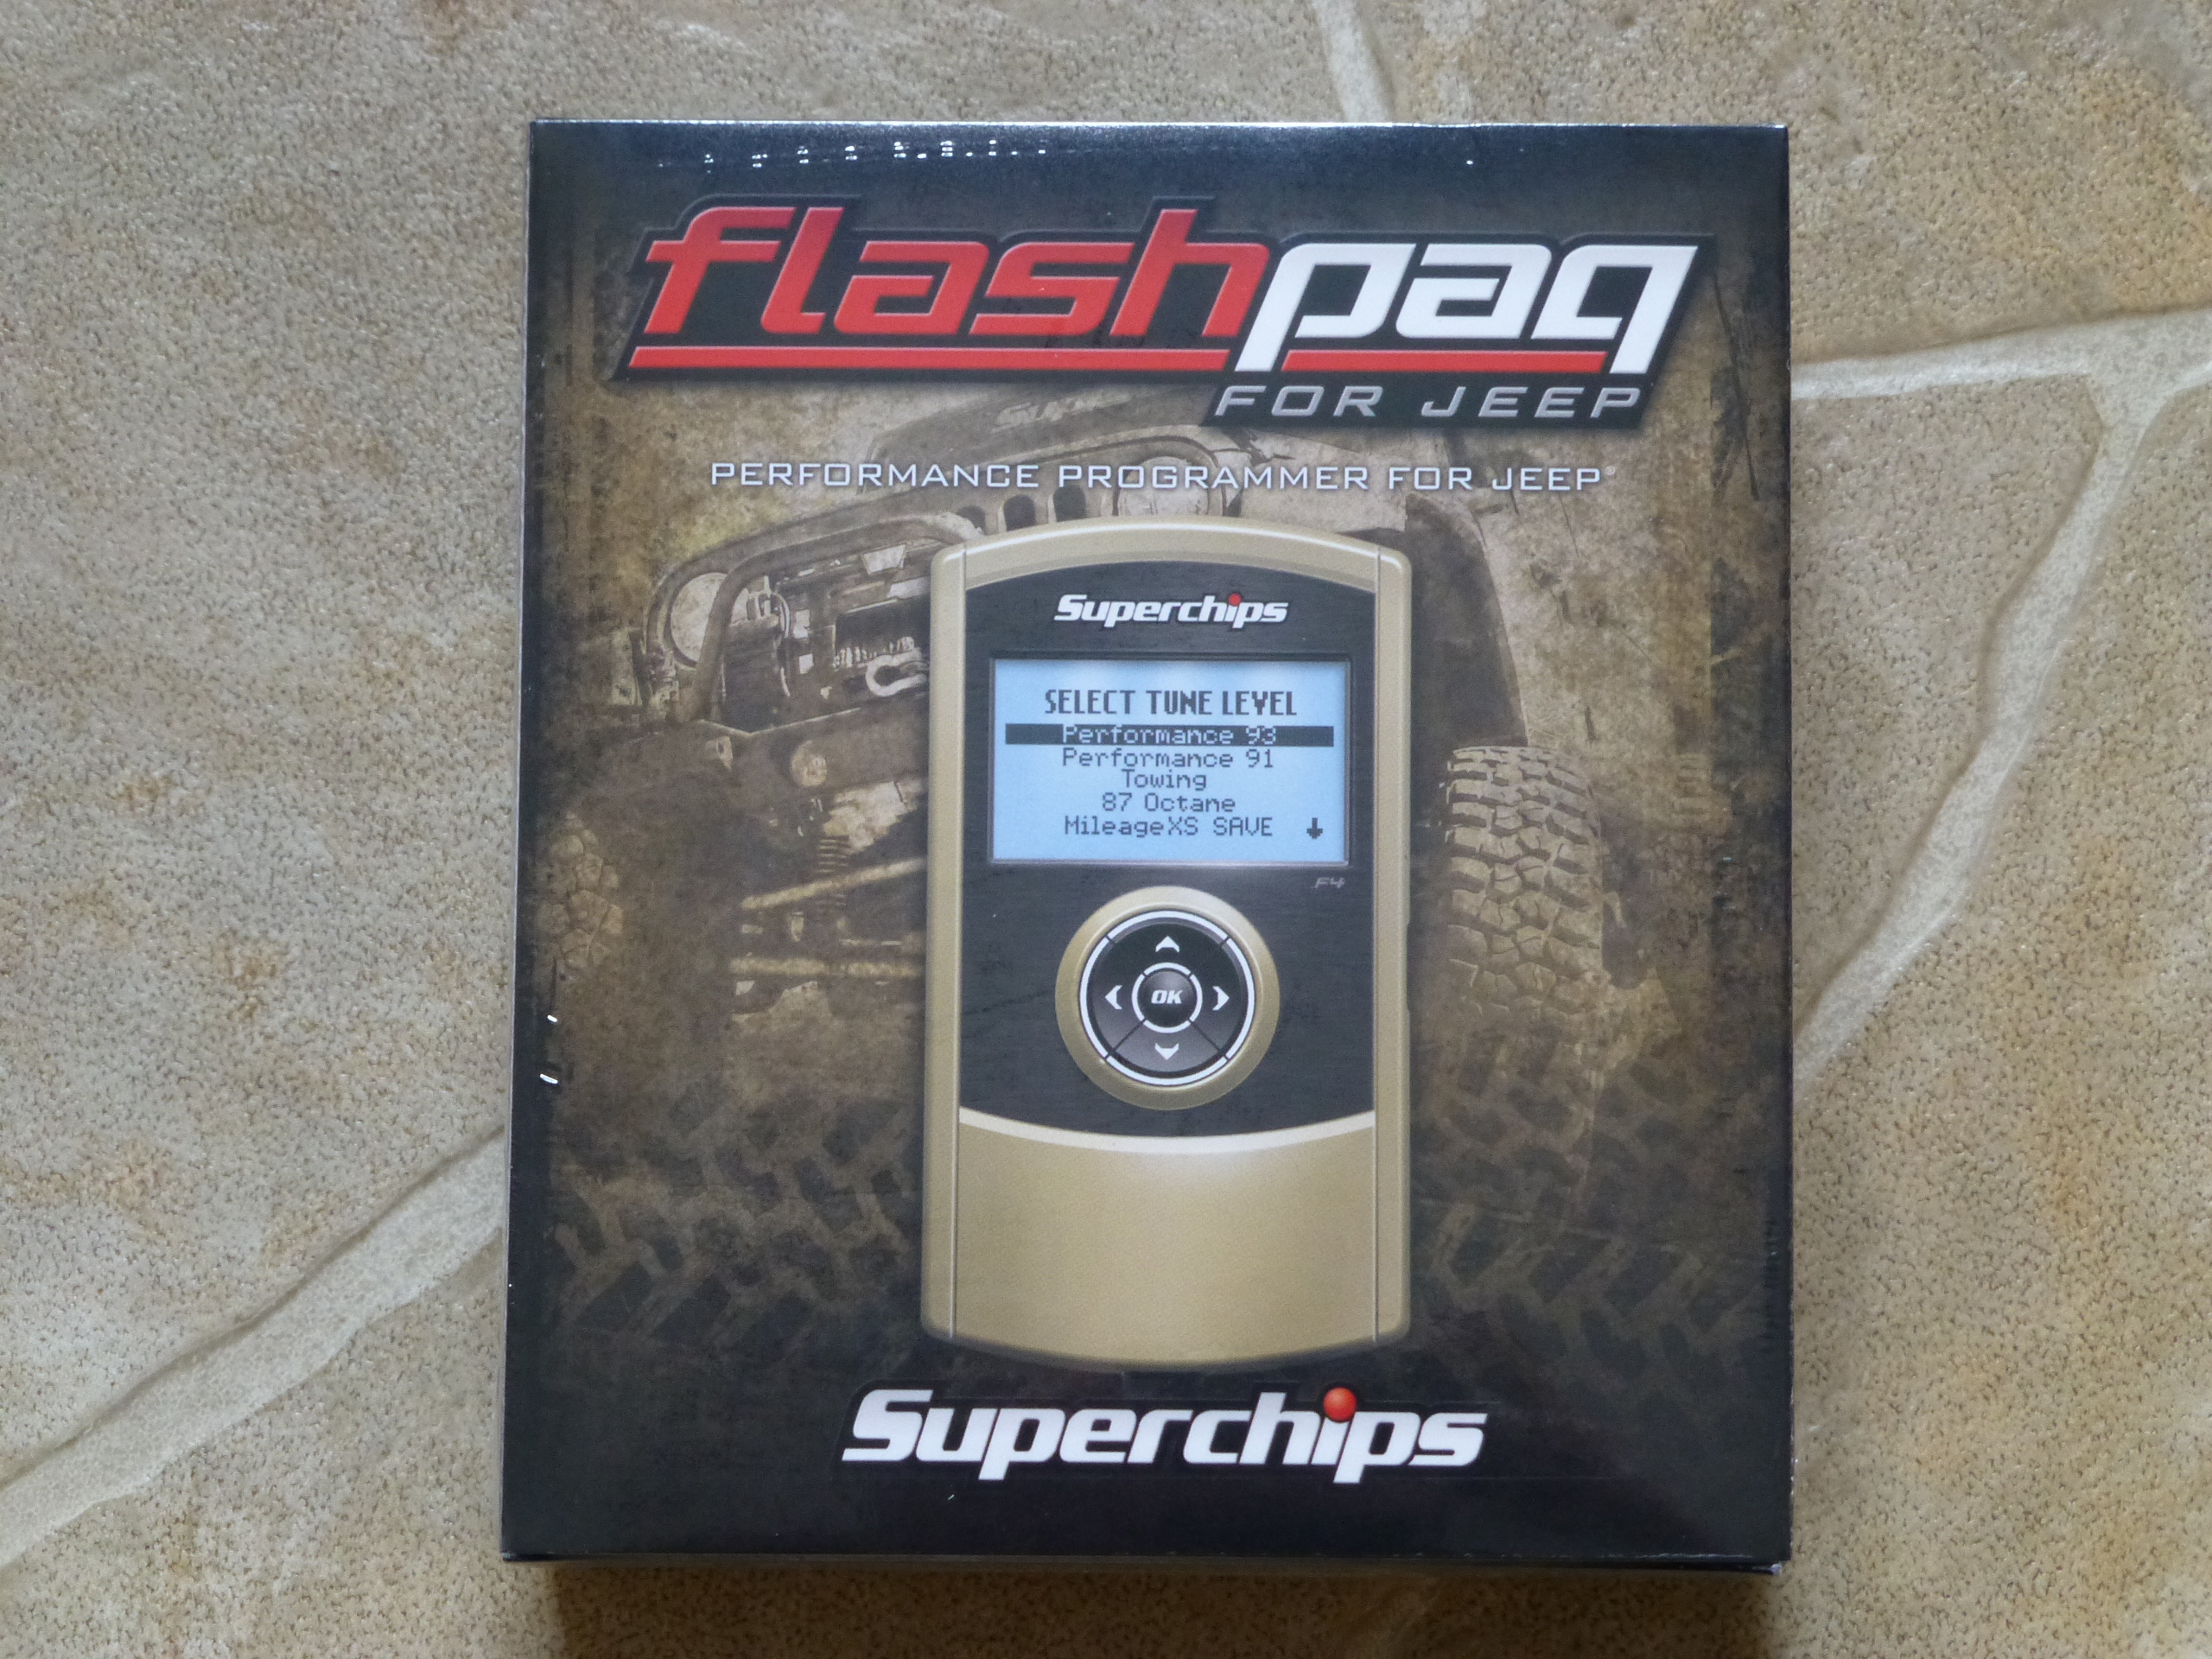 Superchips Flashpaq Review - Installation - Jeep Lifestyles